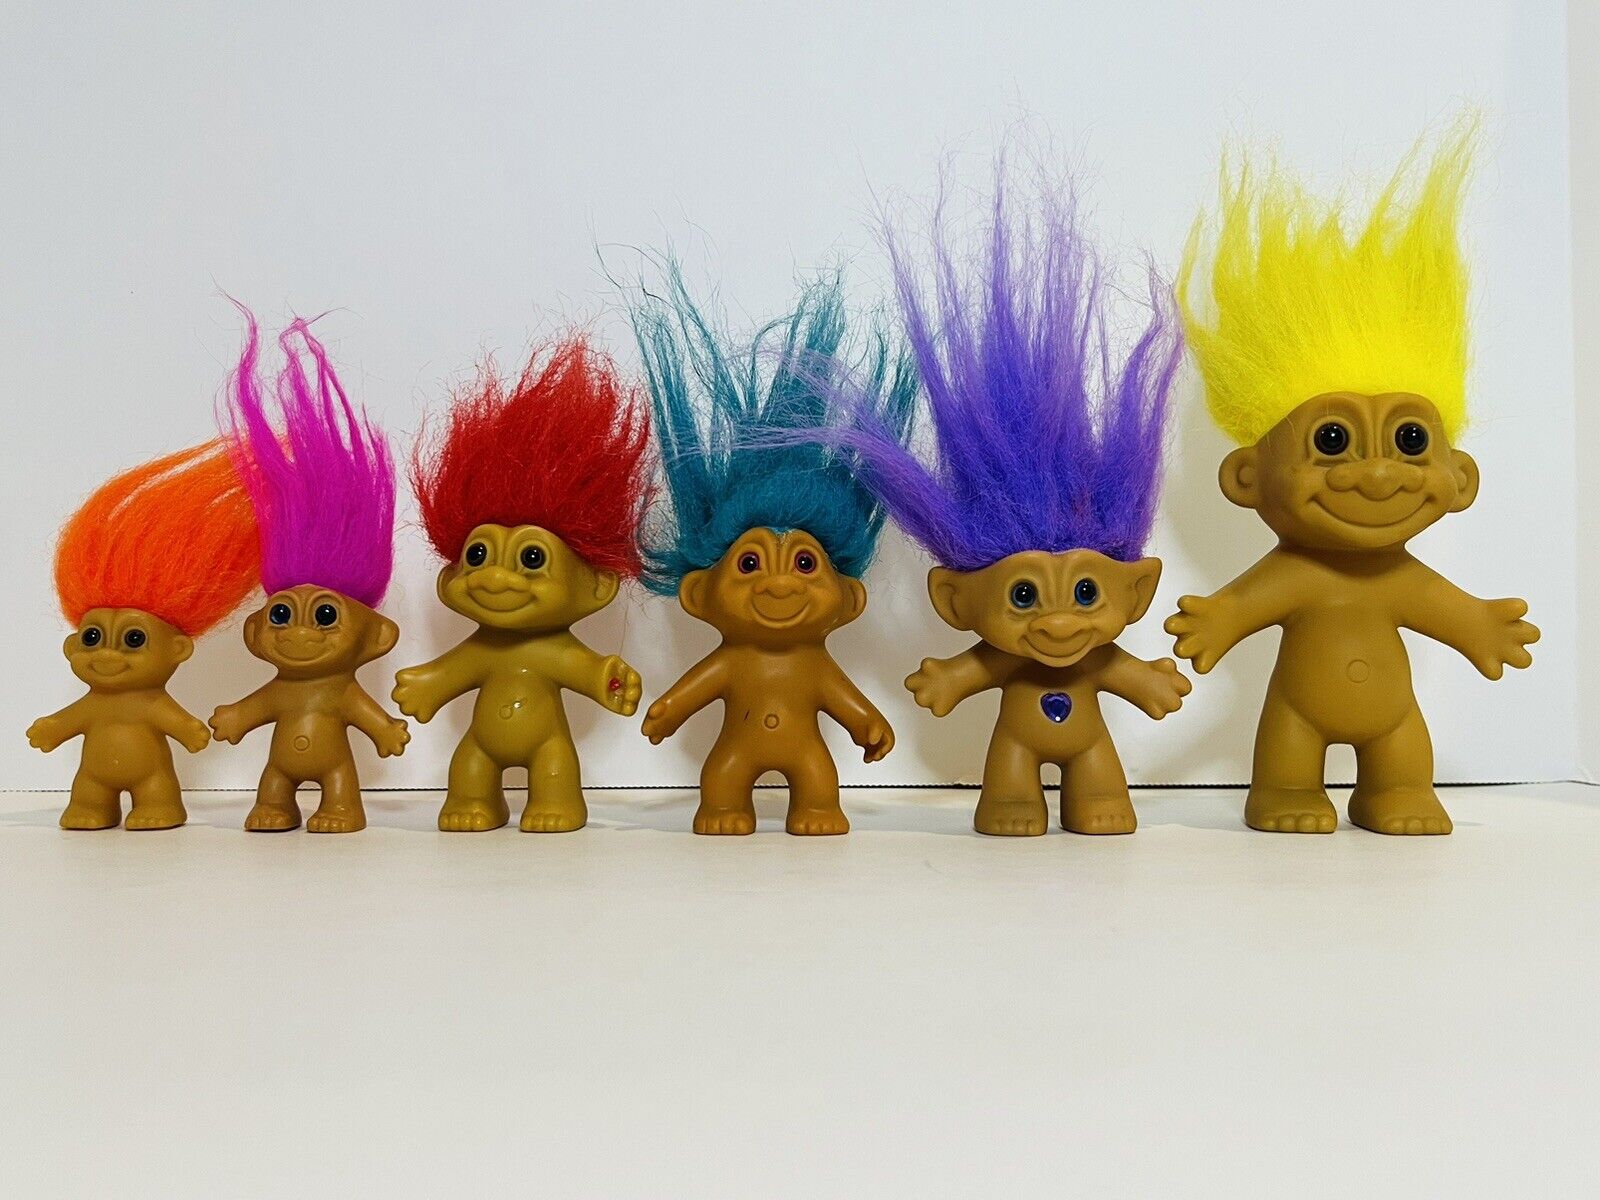 6 Vintage Russ Troll Dolls (Orange, Hot Pink, Turquoise, Purple, Yellow)